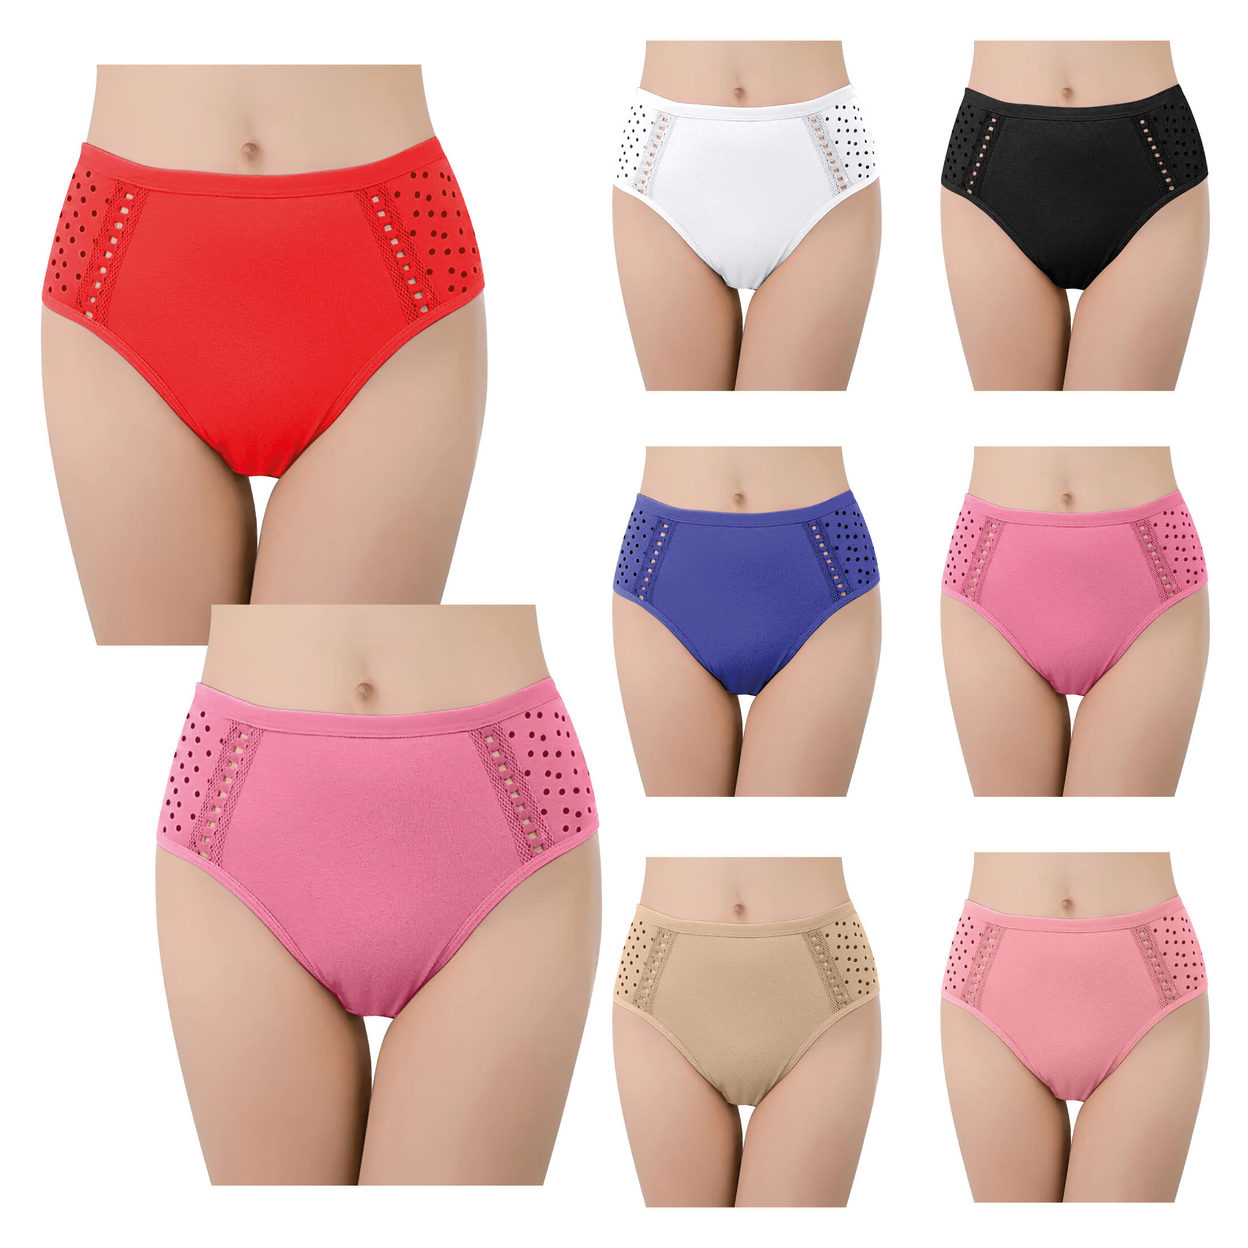 6-Pack Women's Seamless Comfort Flex Fit Underwear Briefs Soft Breathable Lightweight Regular Ladies Panties - M